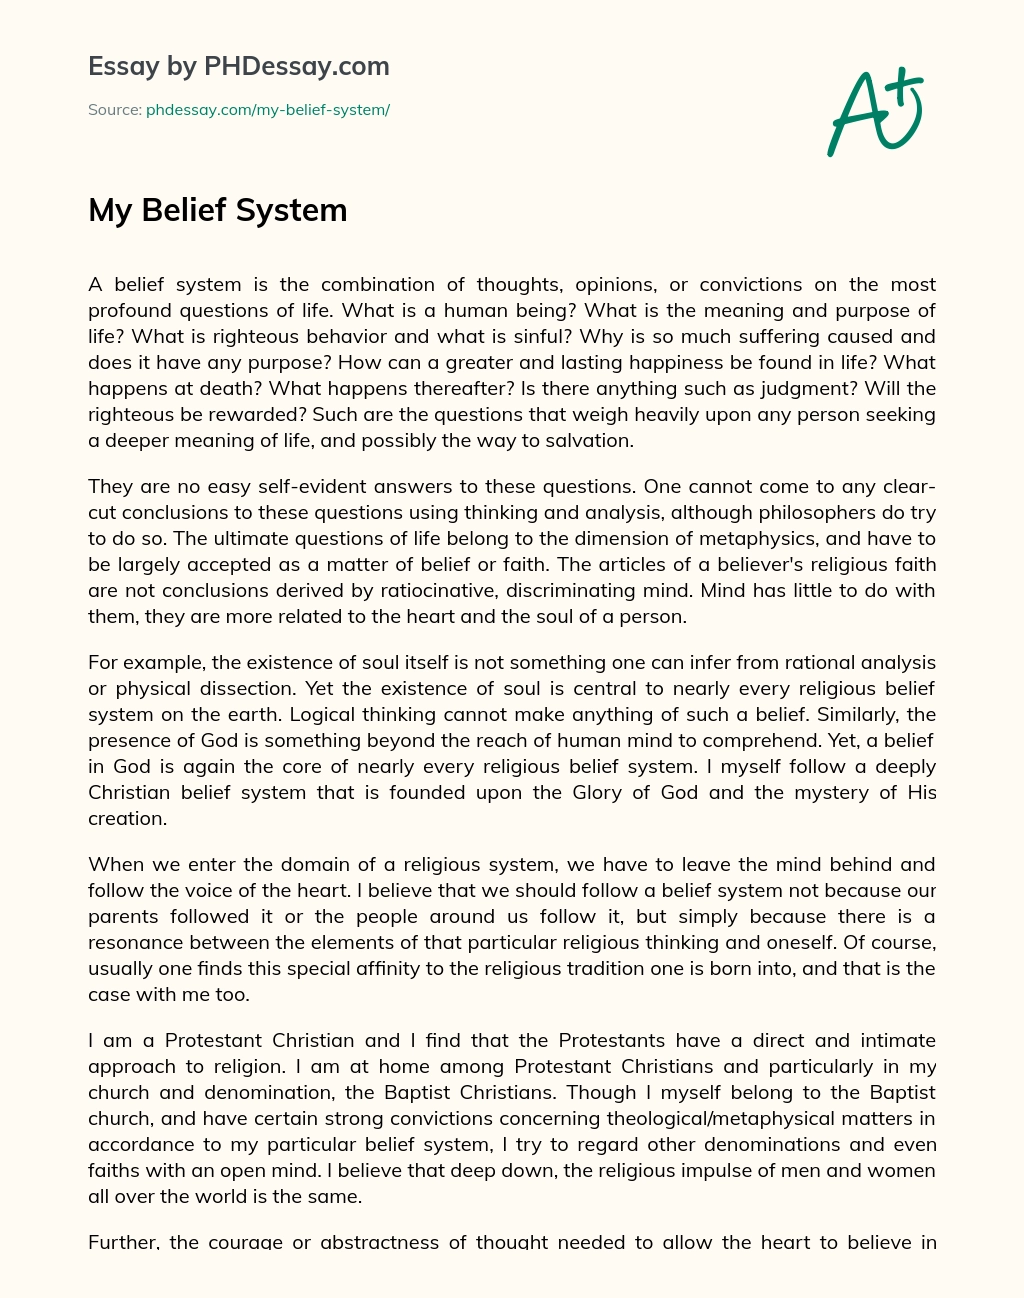 My Belief System essay